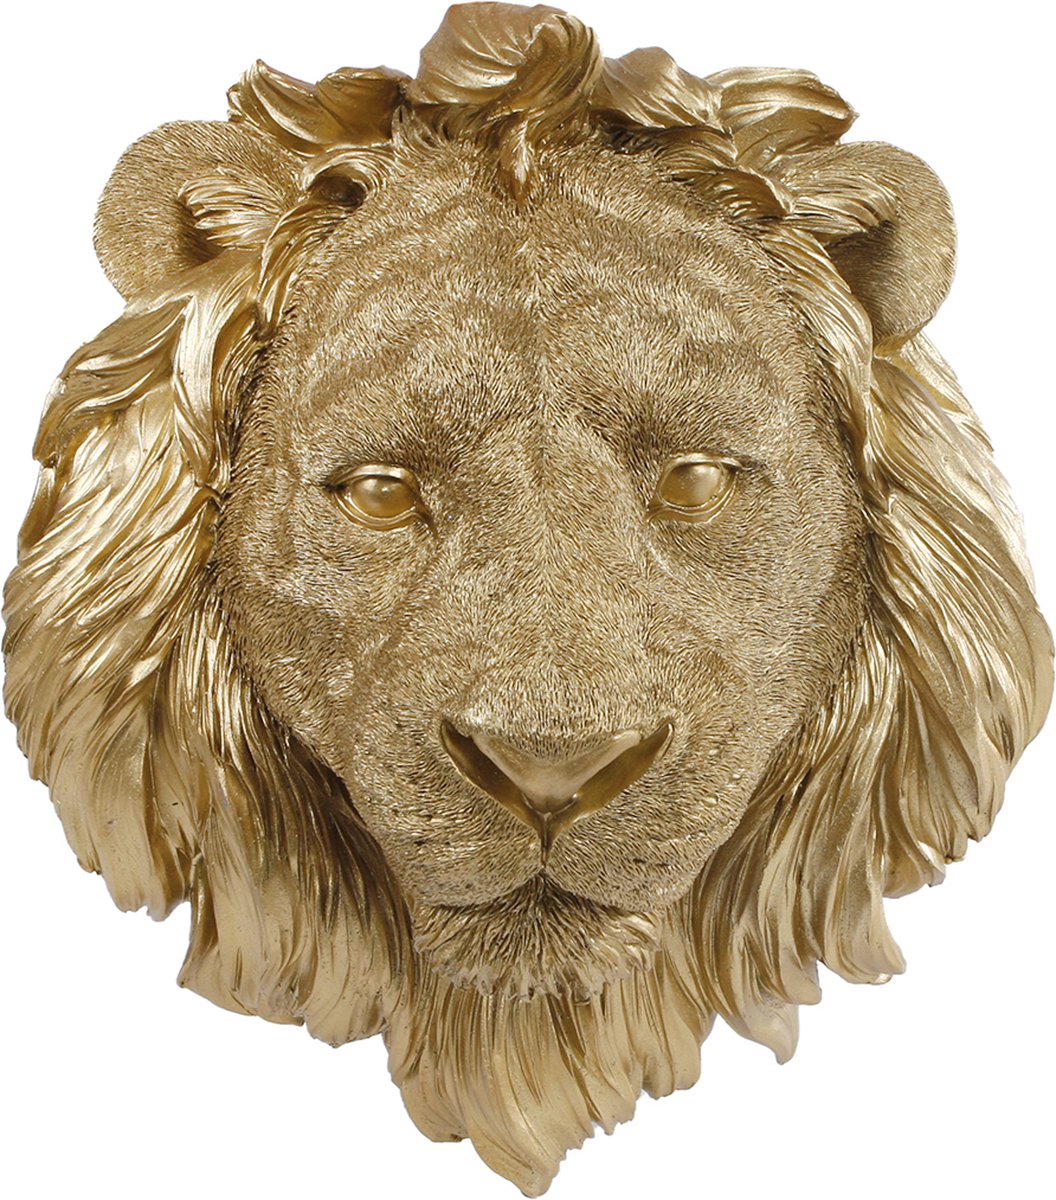 Wanddecoratie leeuw  "Lion"  goud polystone 27 x 14 x 33 cm | 010238 | Gifts Amsterdam | Stoer & Sober Woonstijl